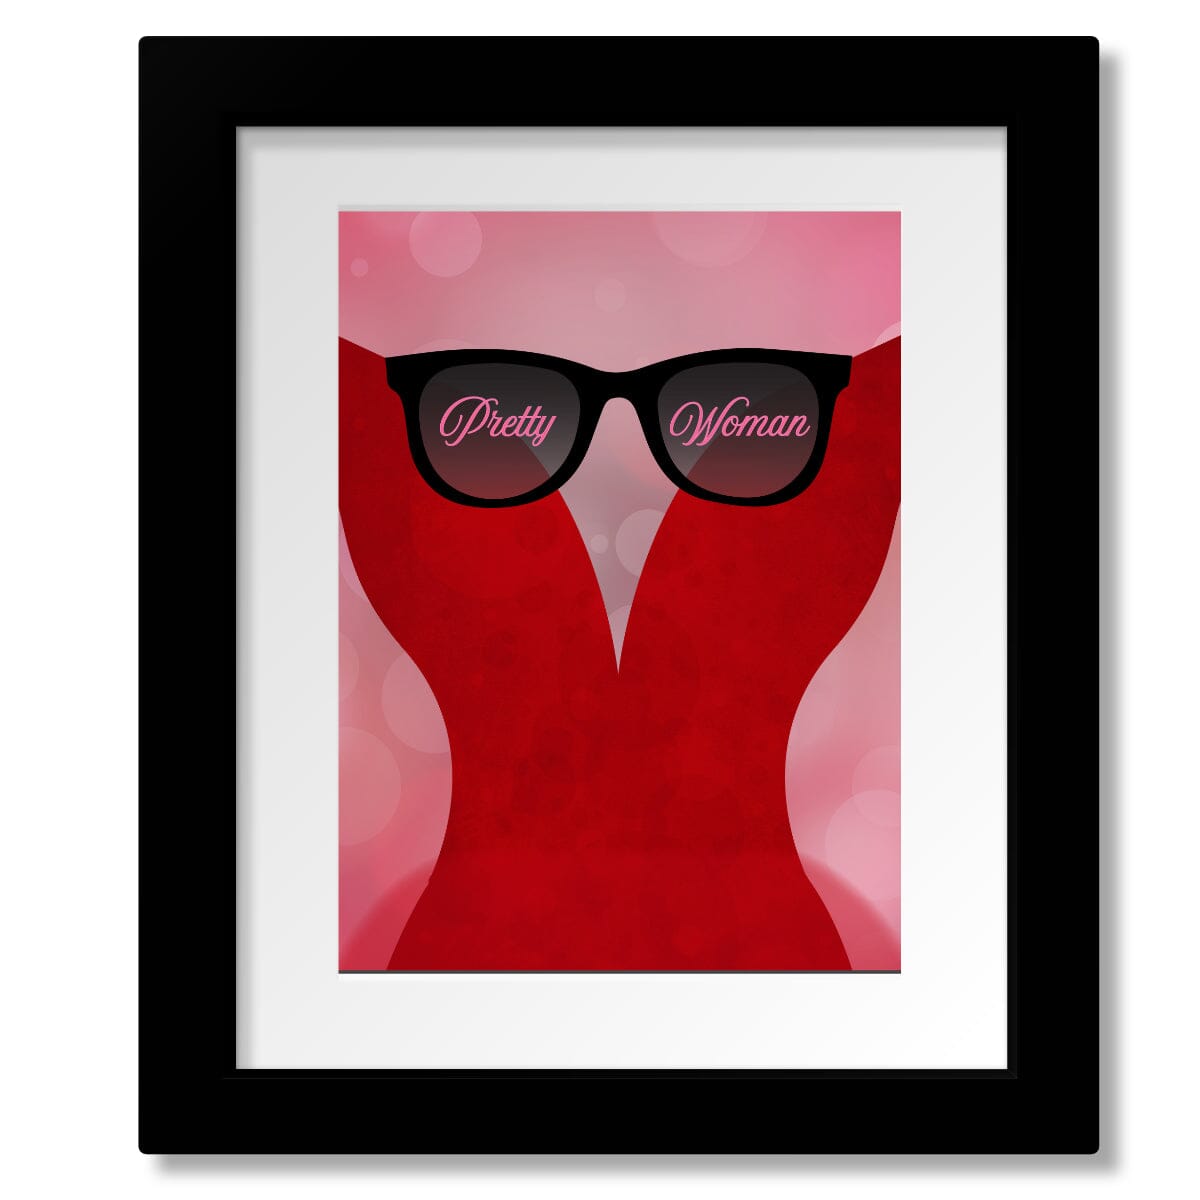 Pretty Woman by Roy Orbison - Lyric Inspired 60s Music Print Song Lyrics Art Song Lyrics Art 8x10 Matted and Framed Print 